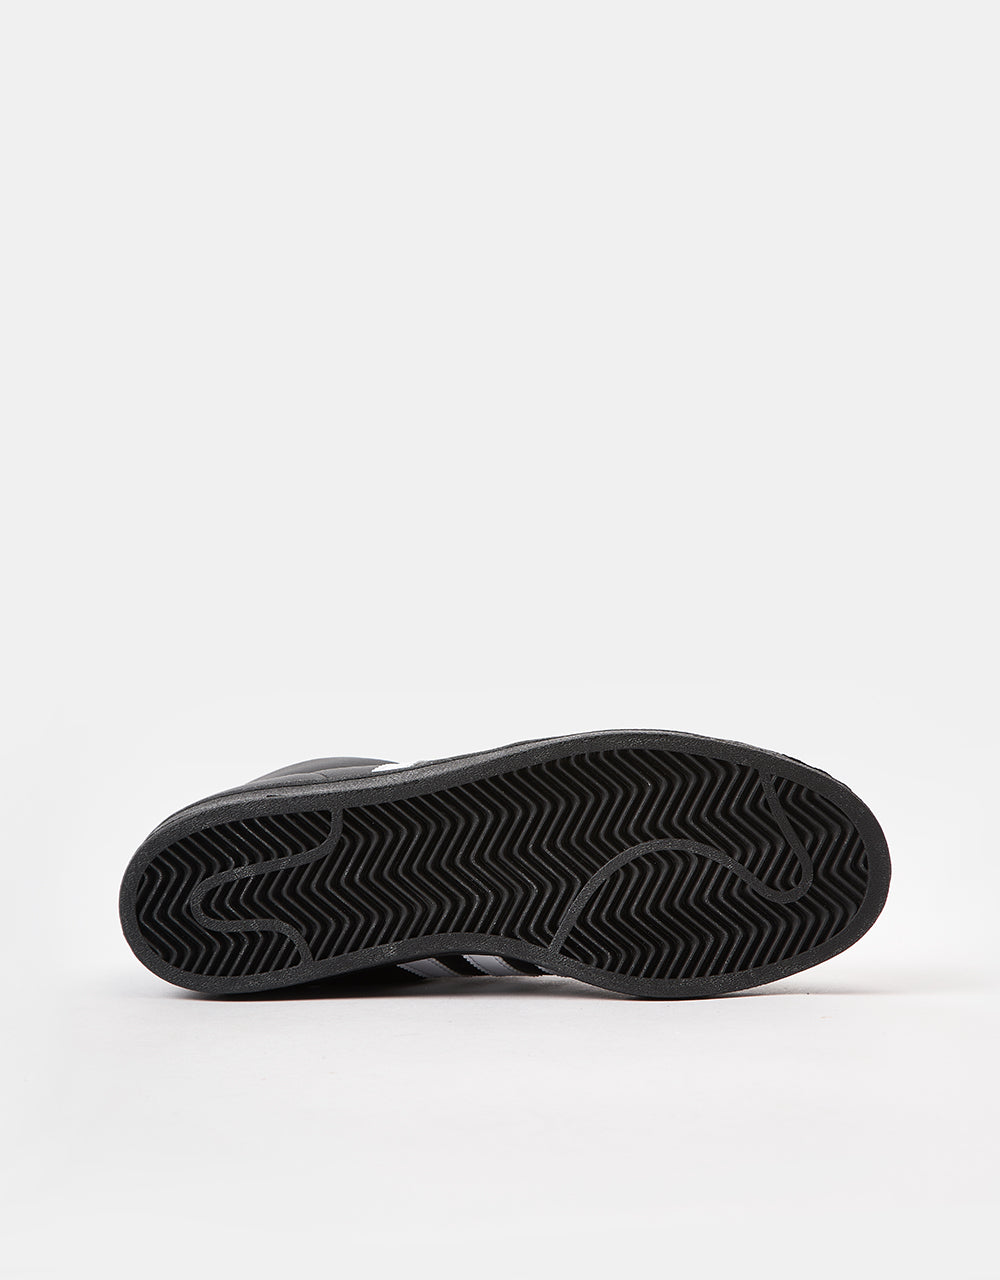 adidas Pro Model ADV Skate Shoes - Core Black/White/Gold Metallic